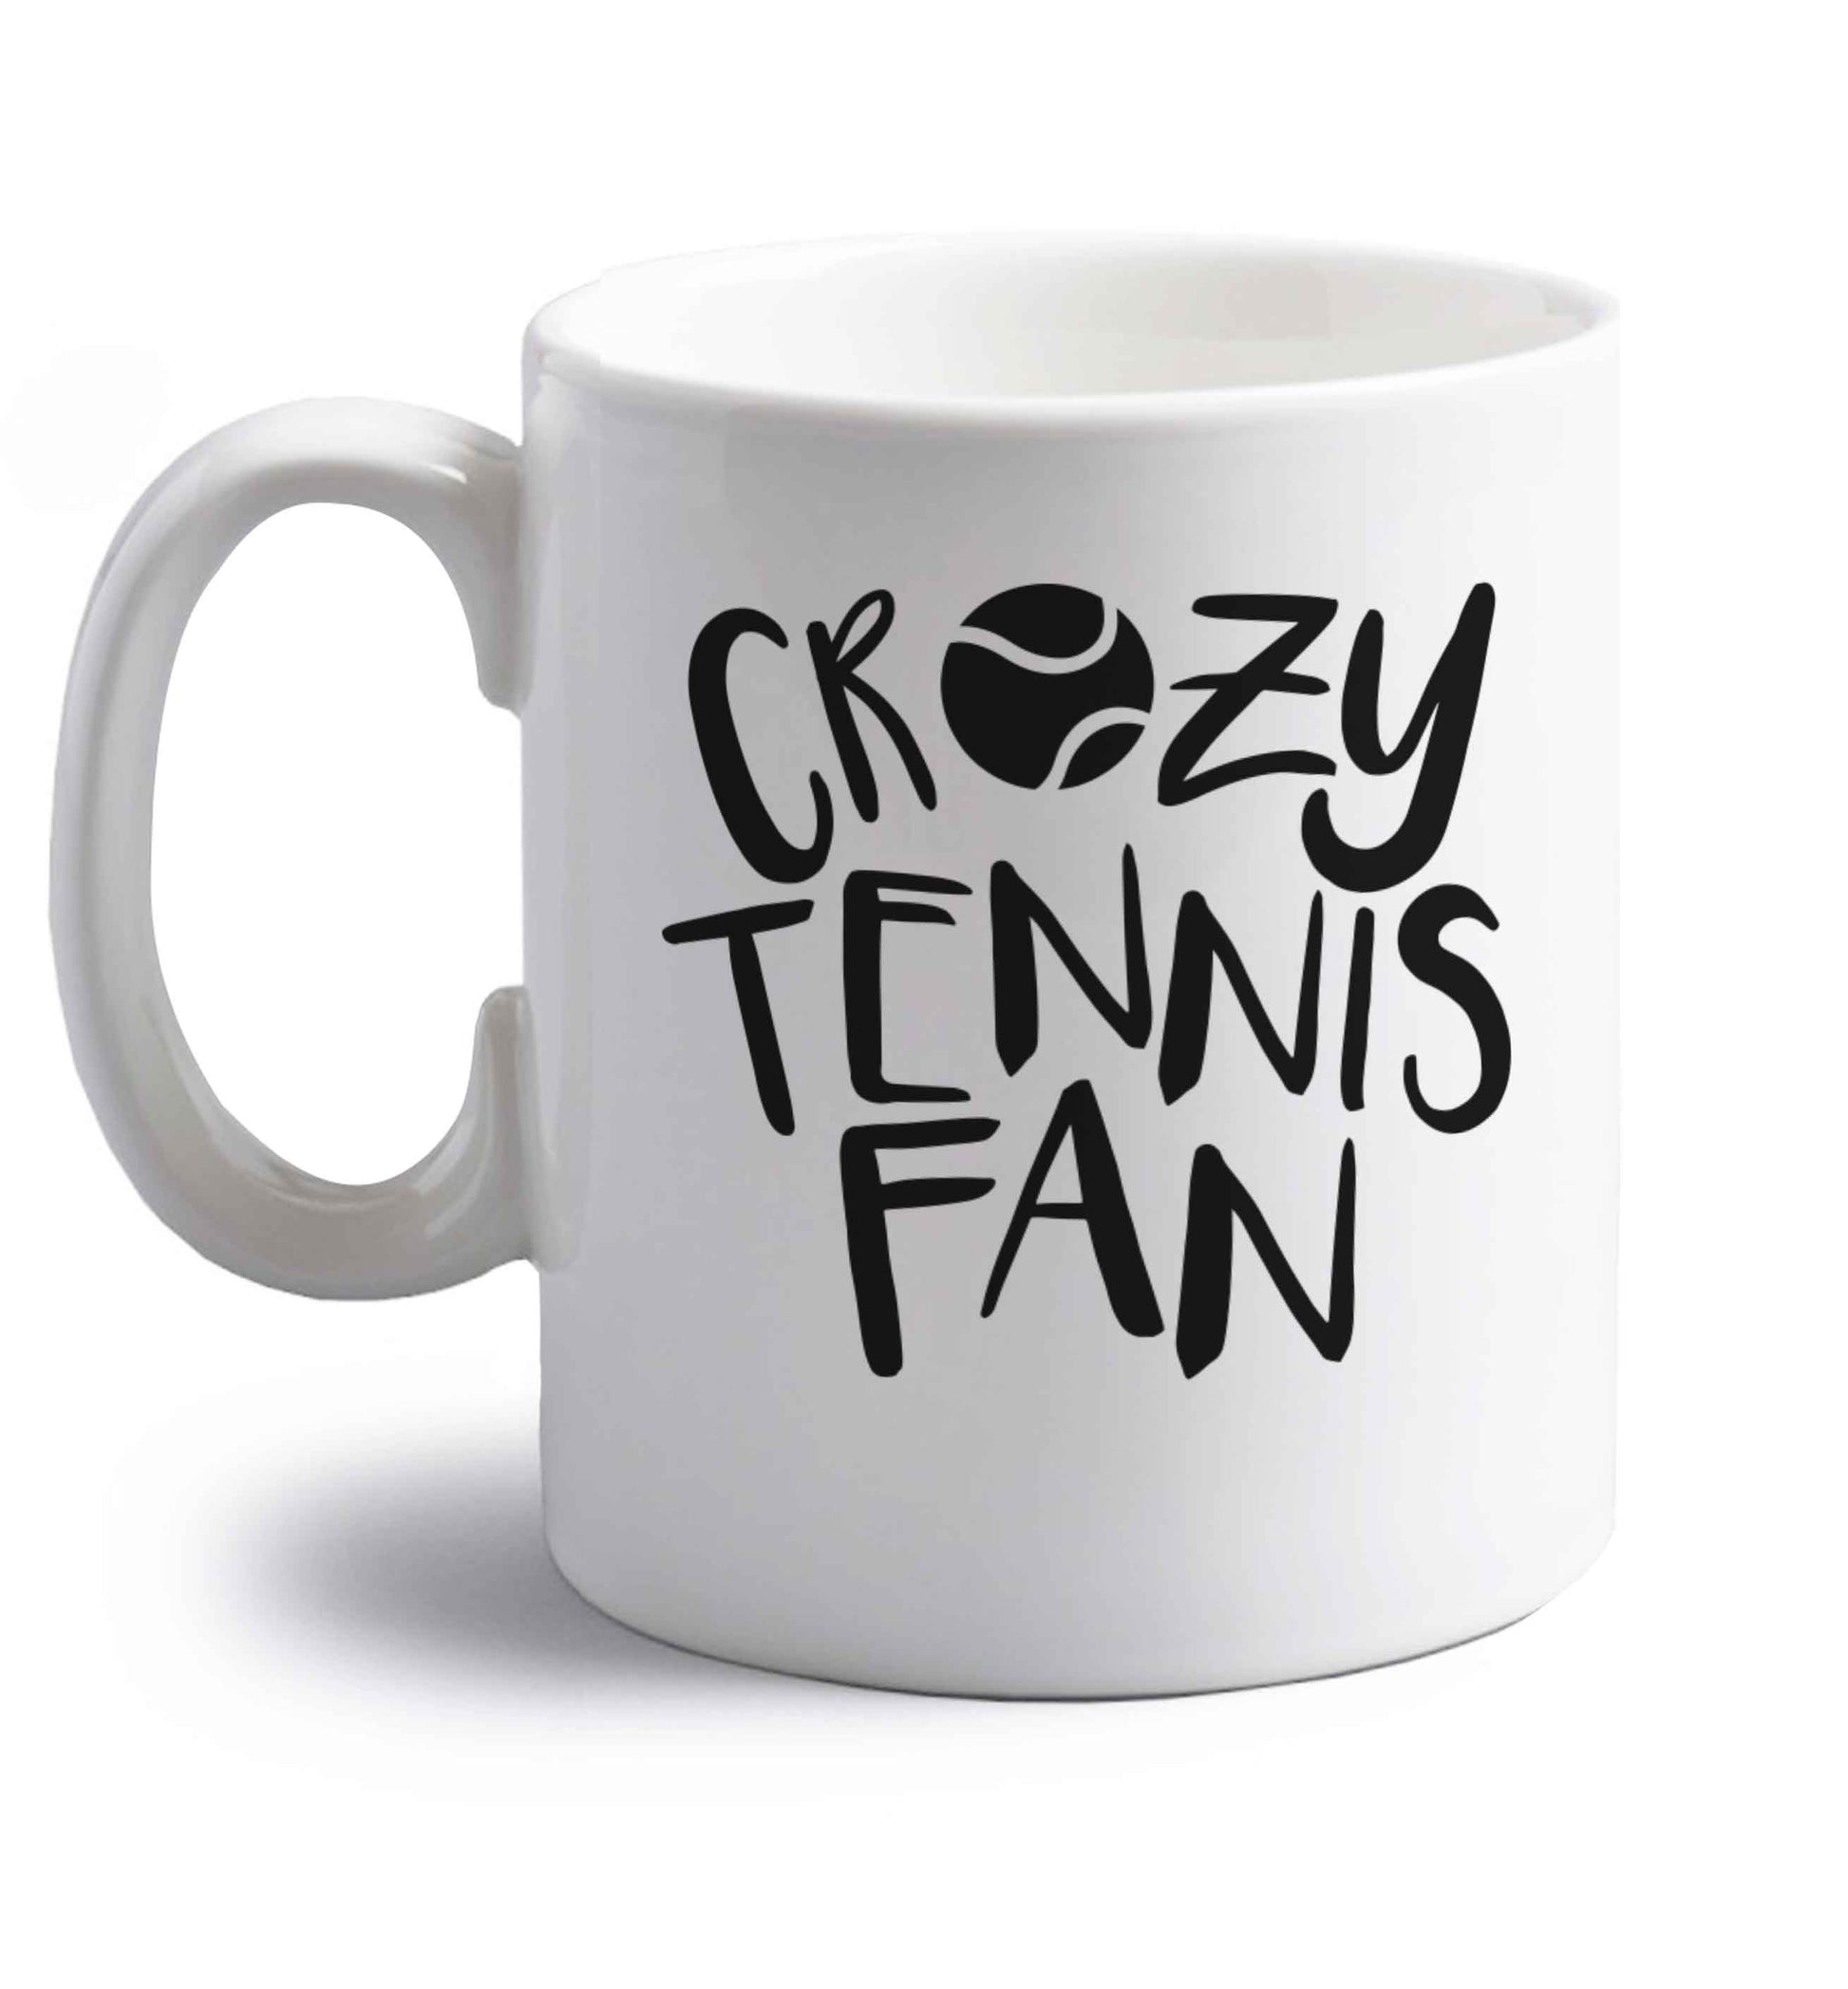 Crazy tennis fan right handed white ceramic mug 